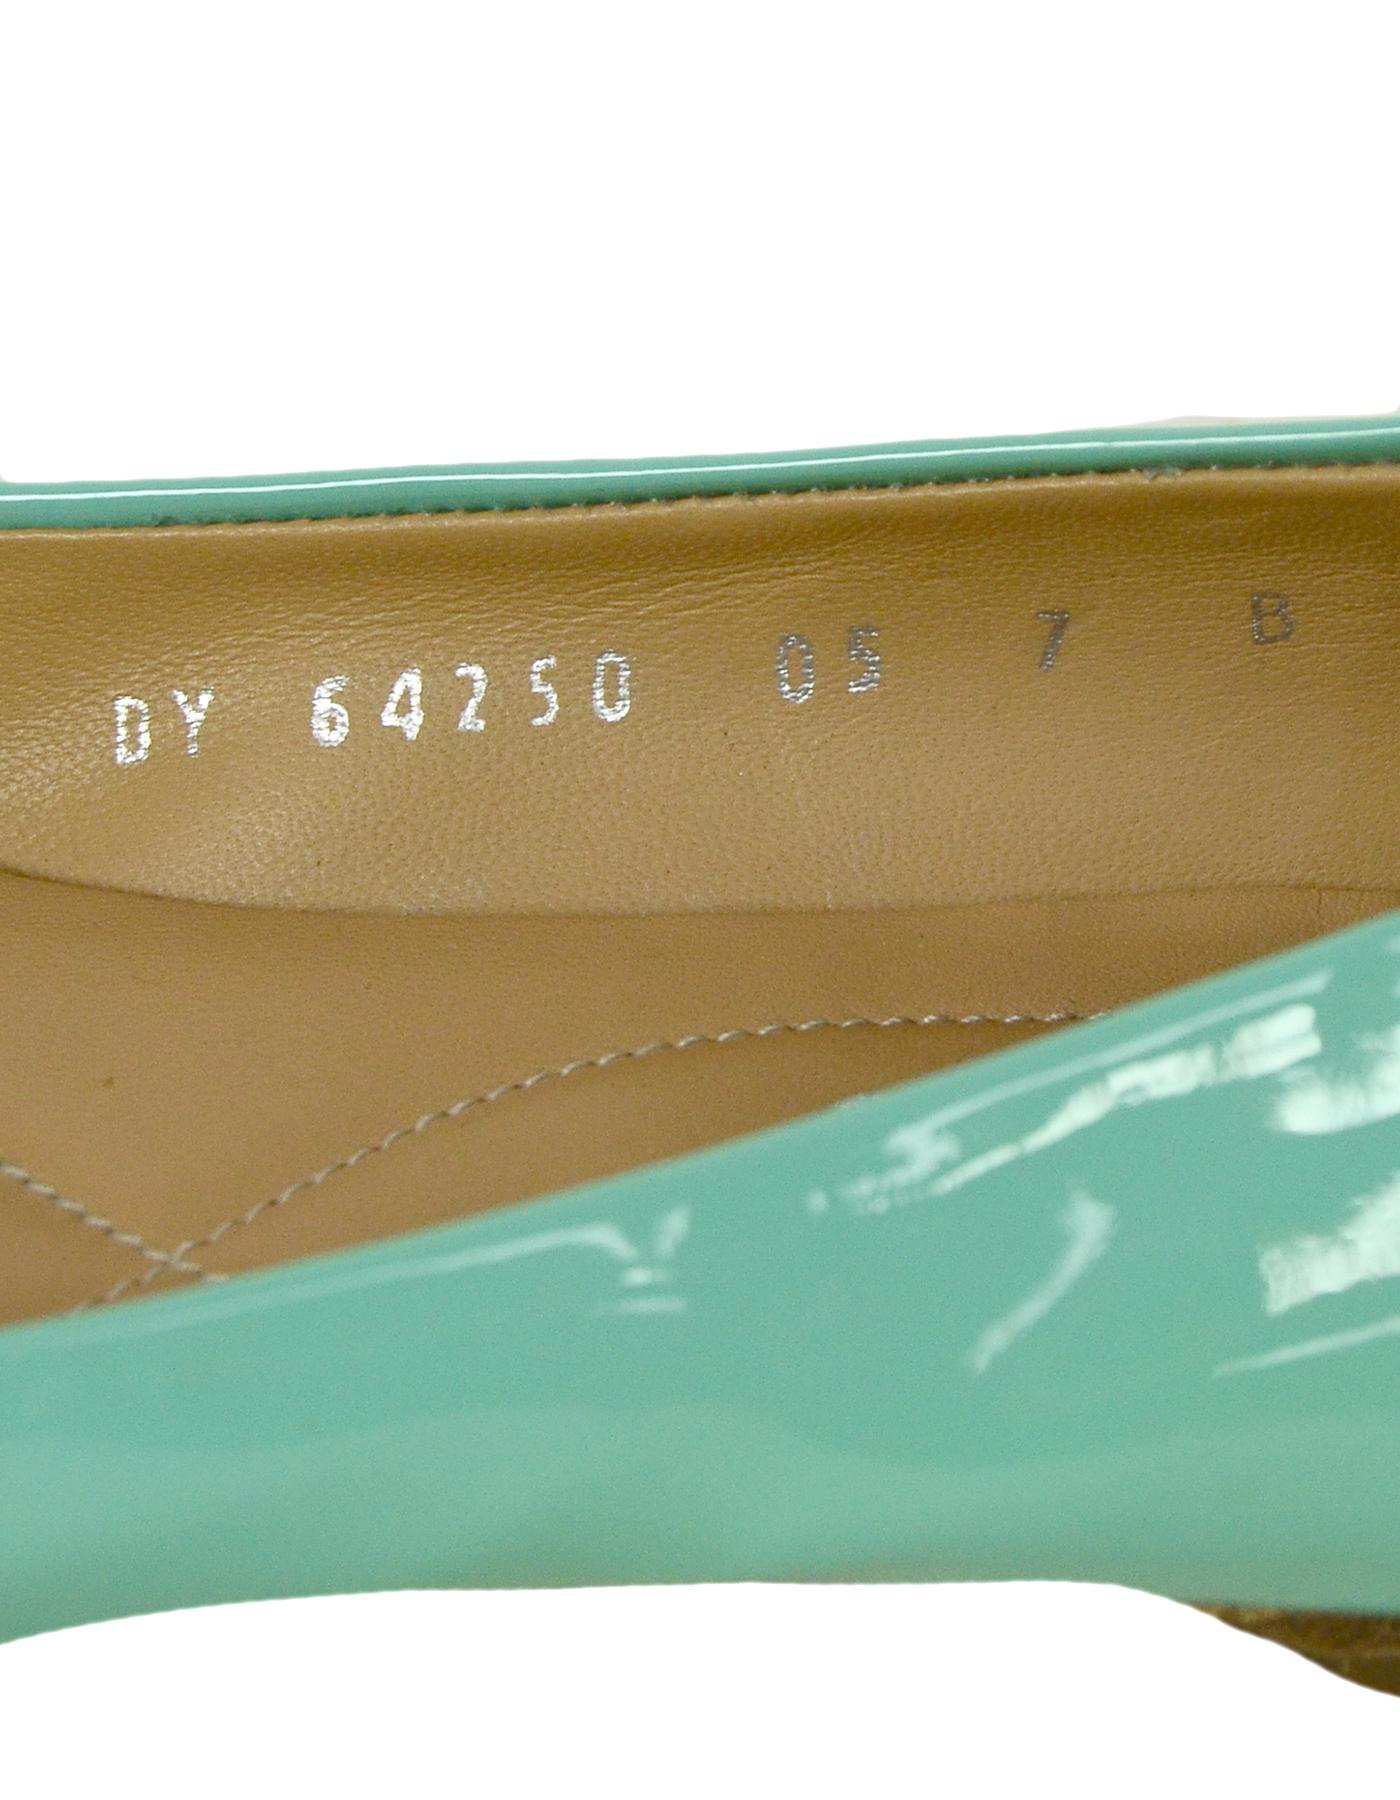 Women's Ferragamo Turquoise Patent Leather Vera Ballet Flats sz 7